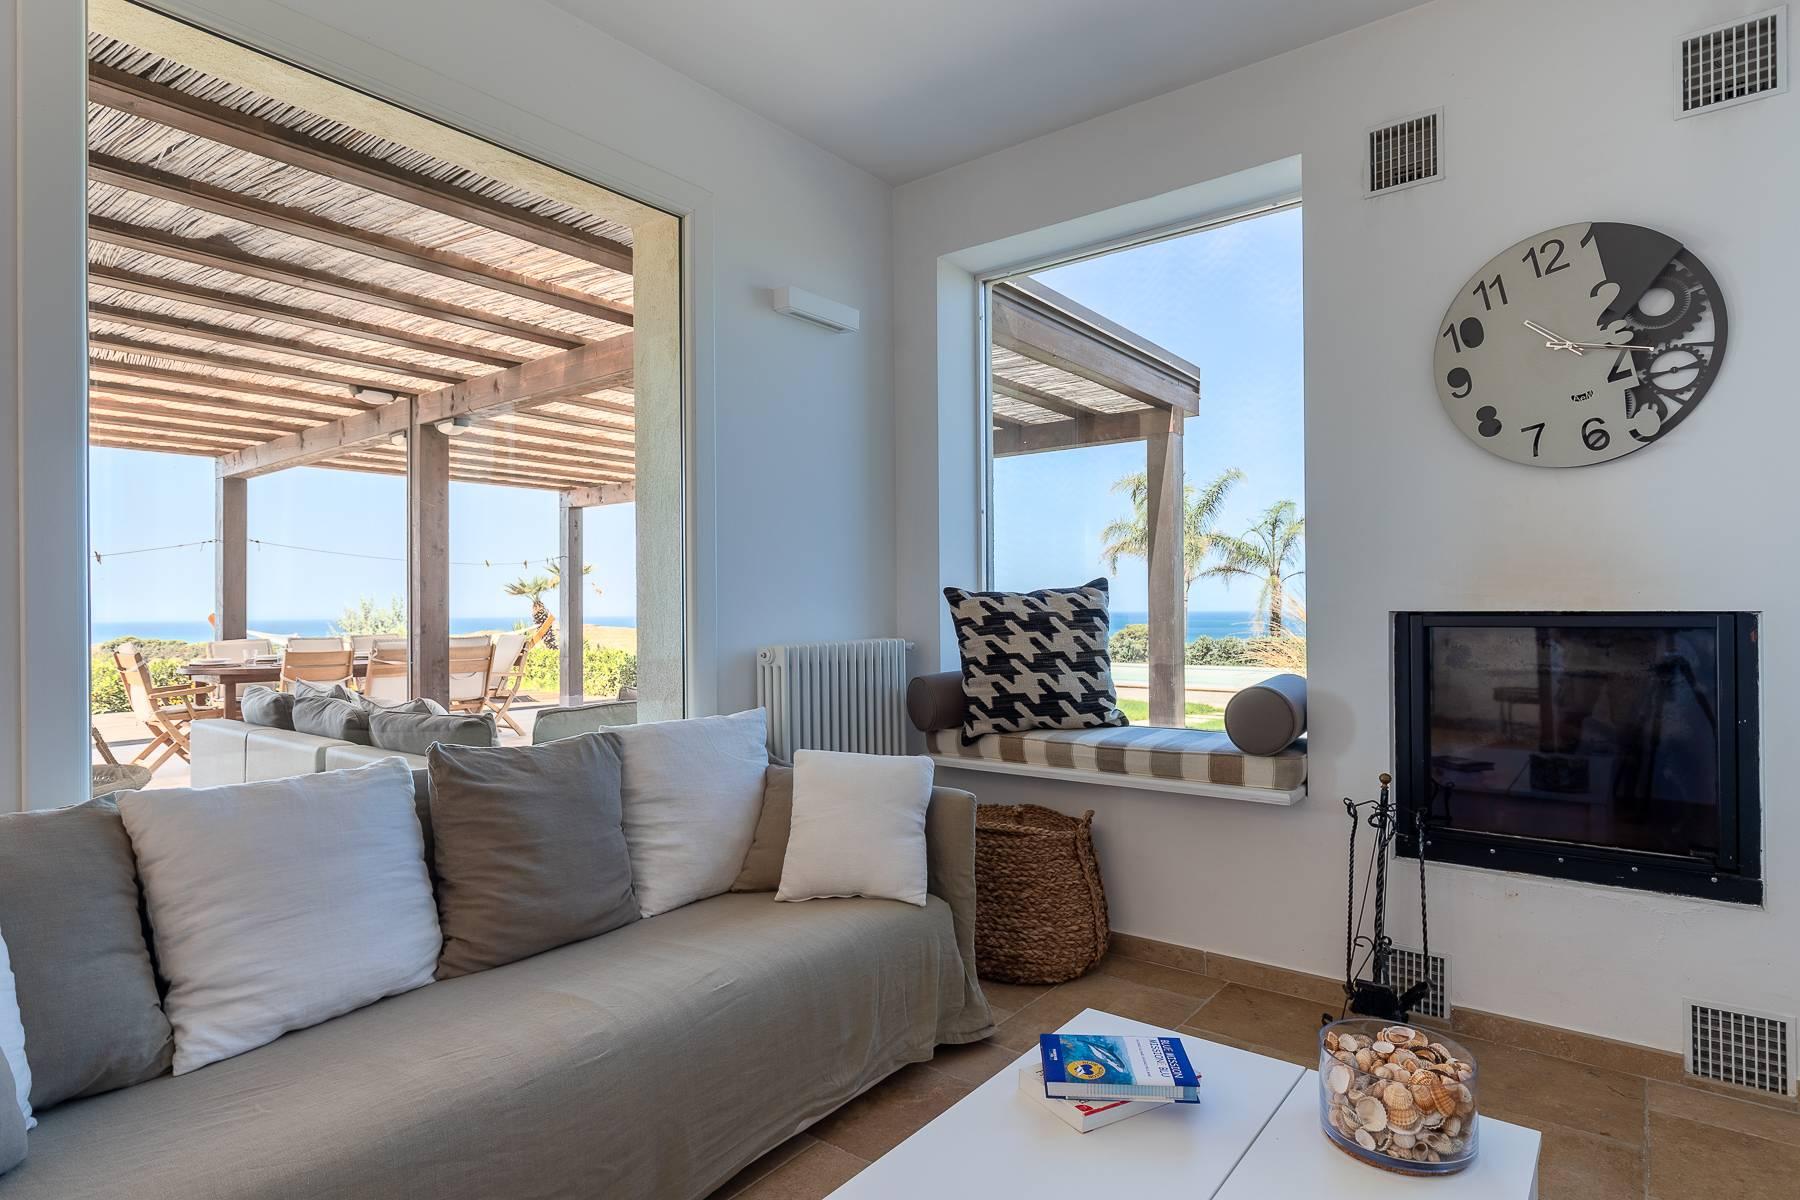 Exclusive villa with stunning views on the Mediterranean sea - 35